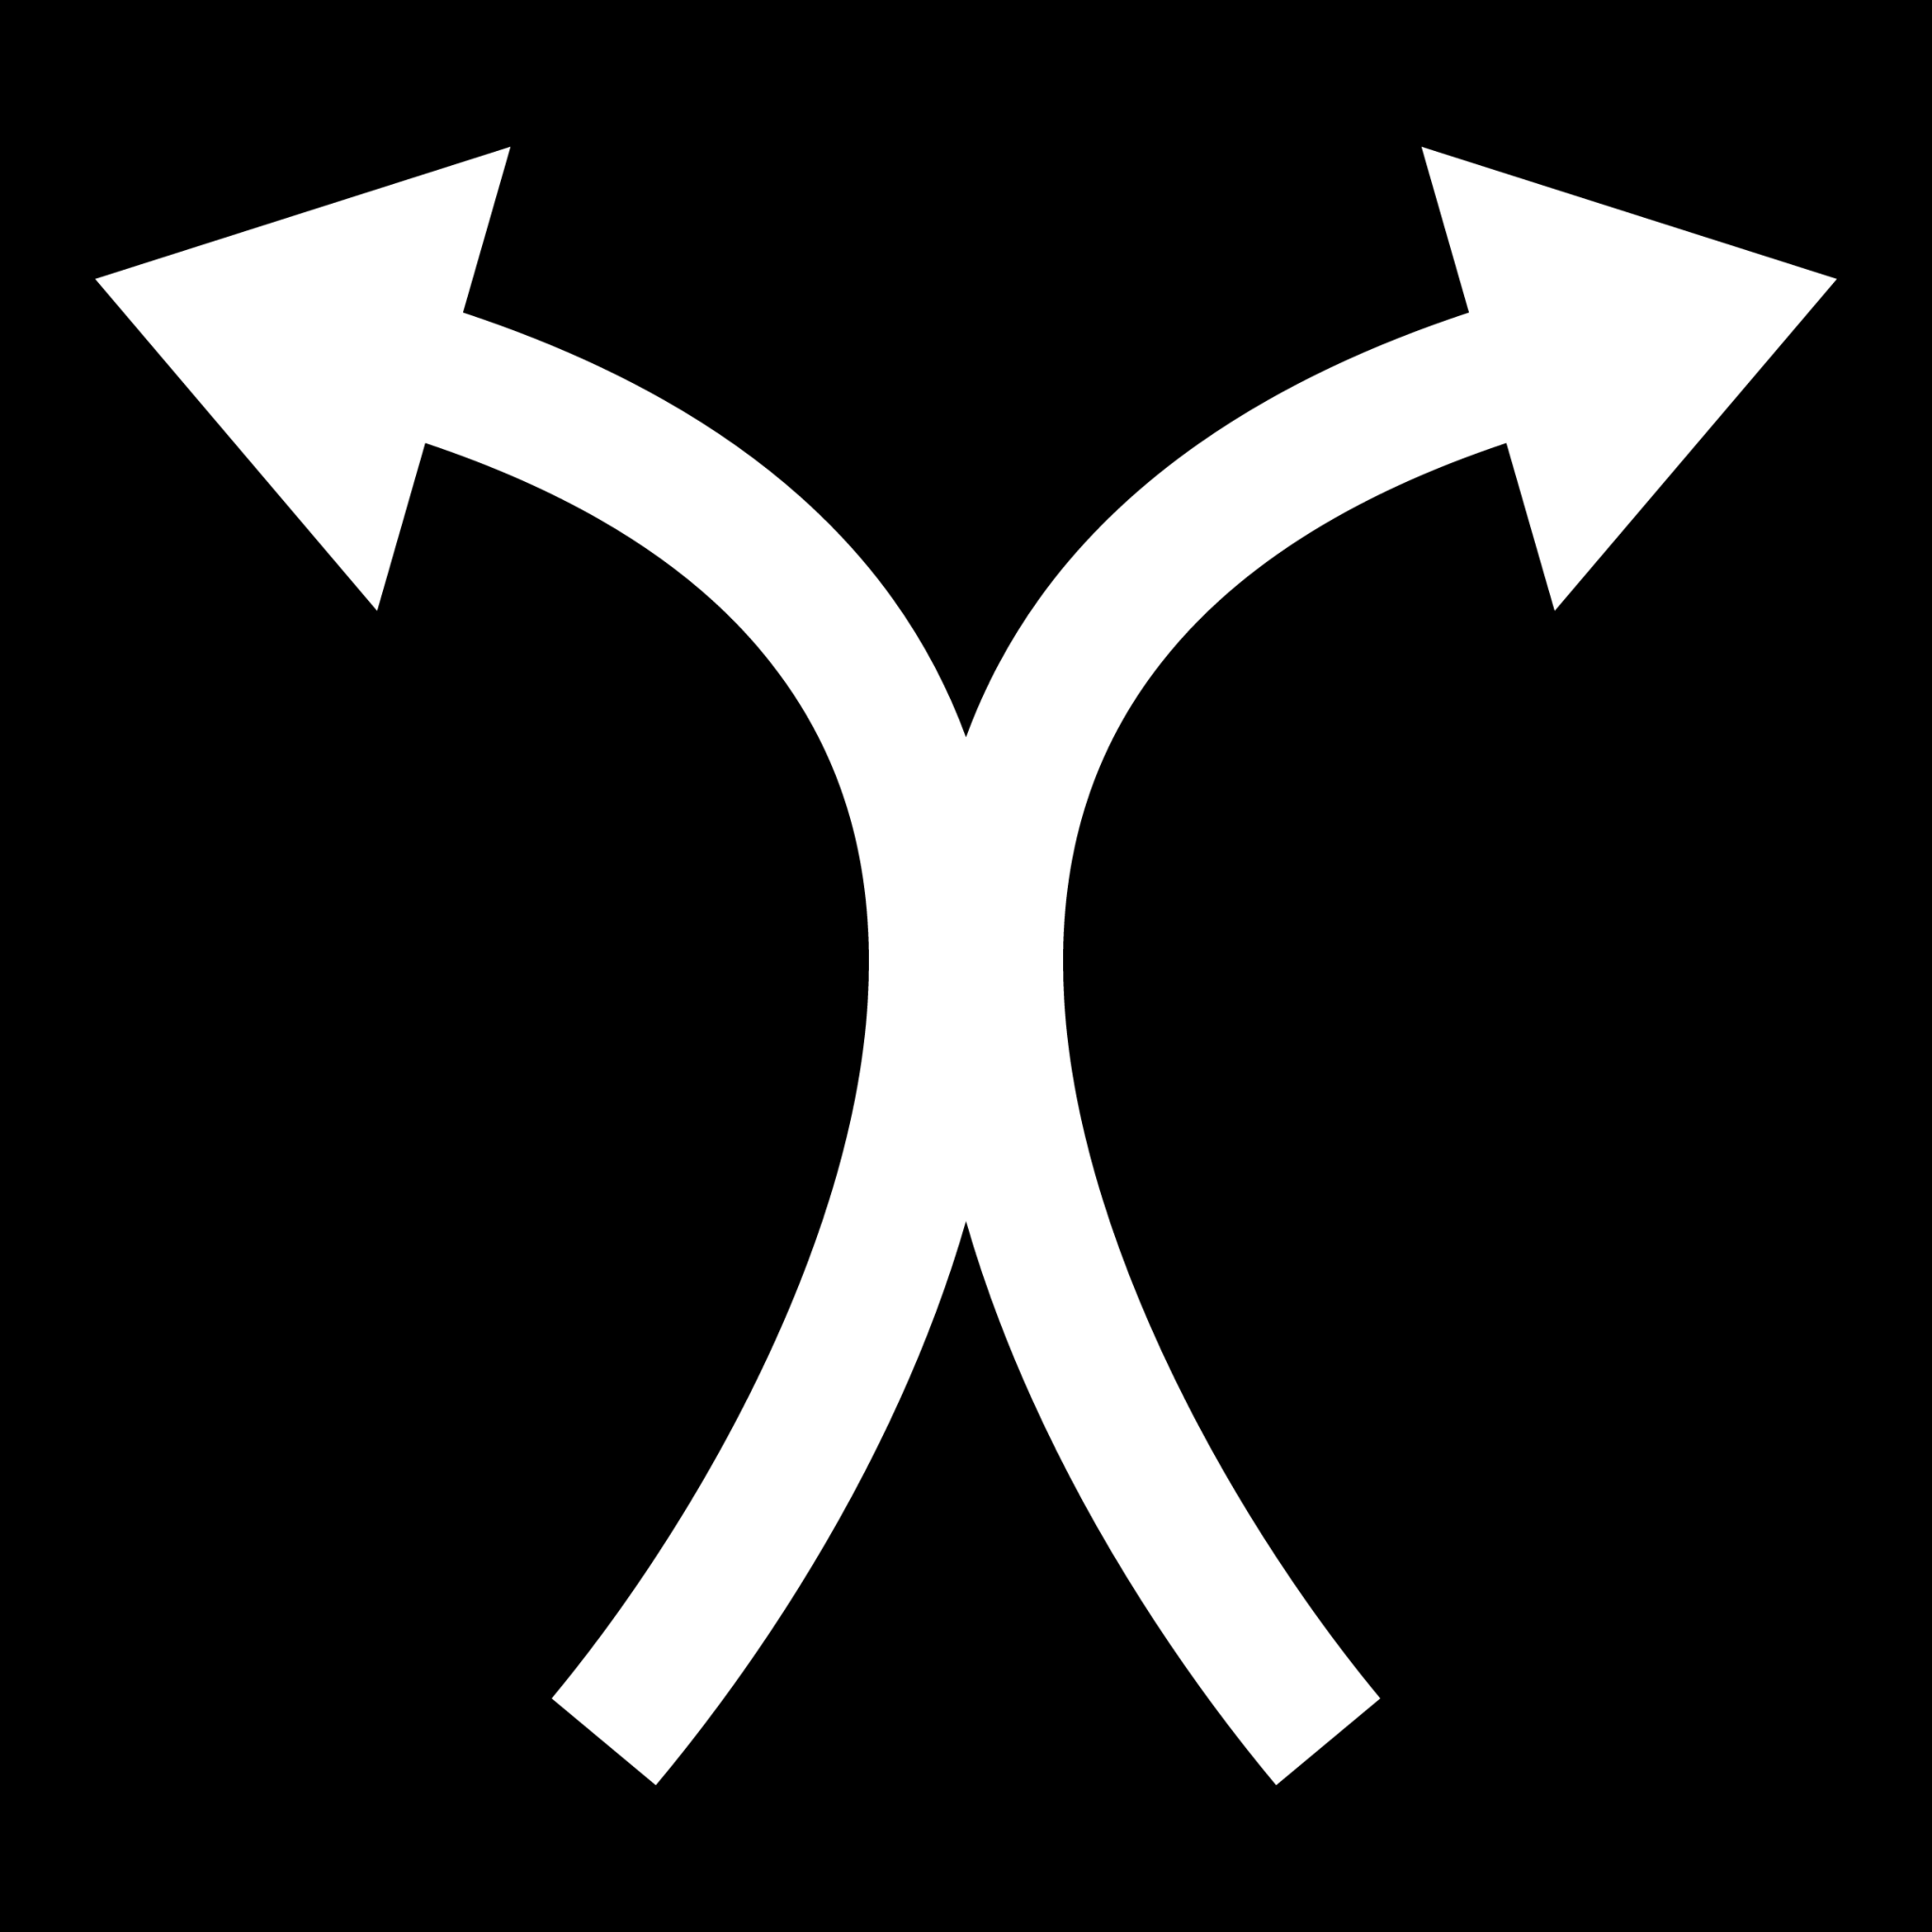 split arrows icon